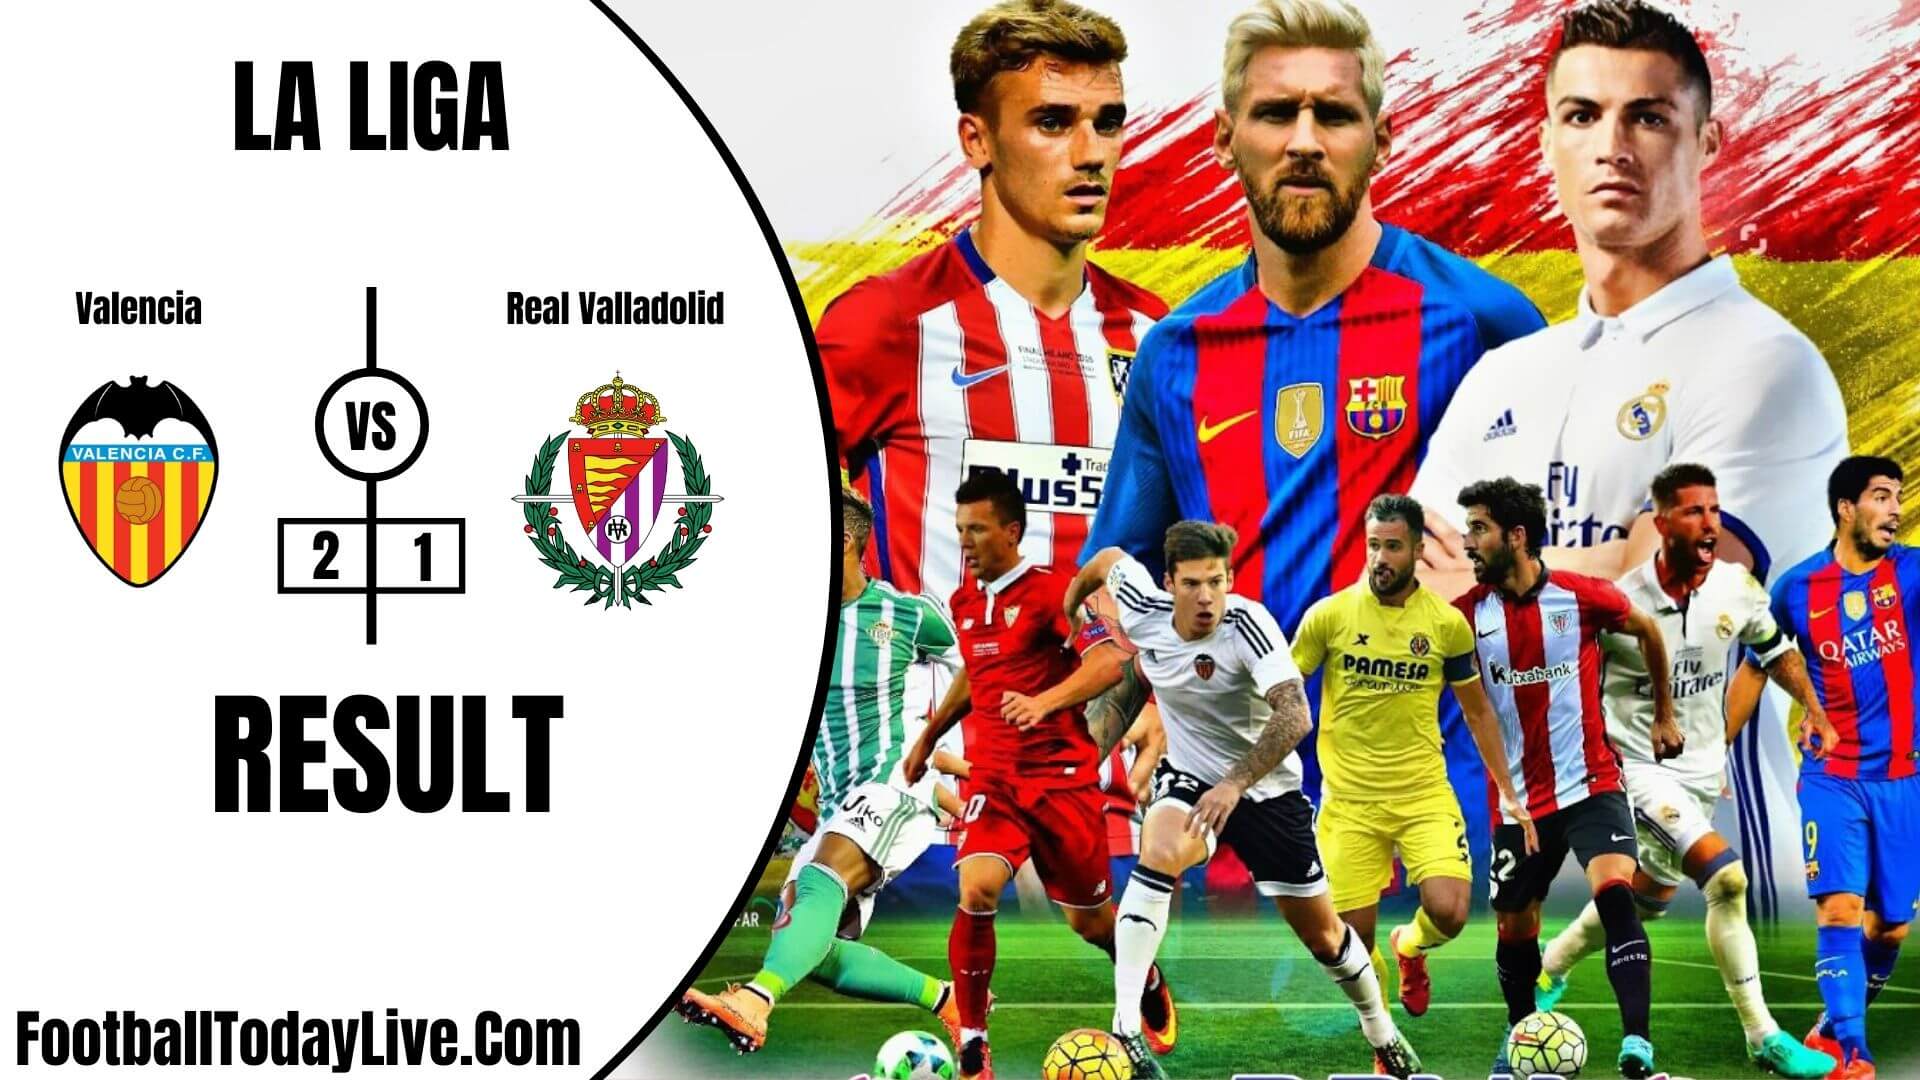 Valencia Vs Real Valladolid | La Liga Week 35 Result 2020